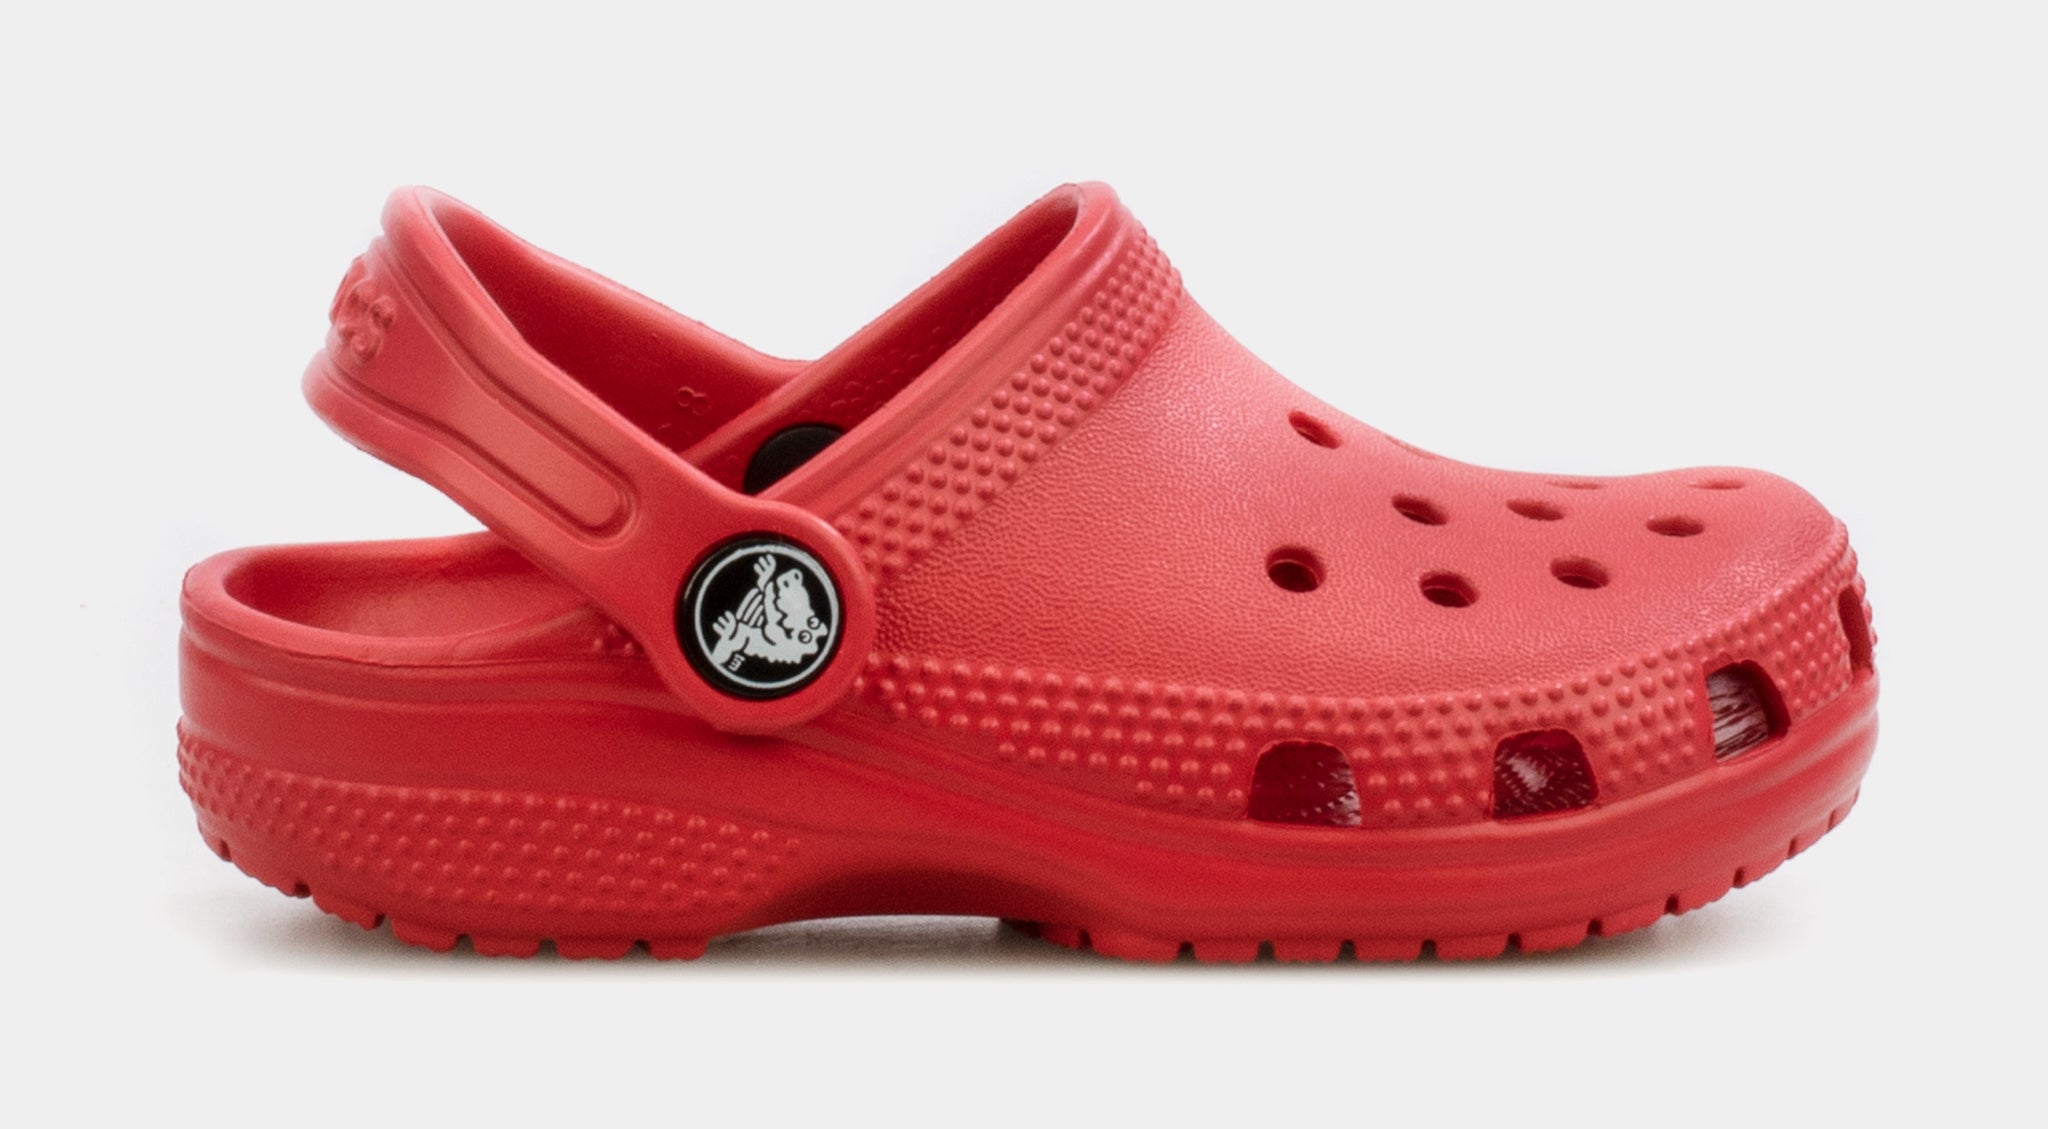 Crocs Wedge Sandals Are Trending on Amazon